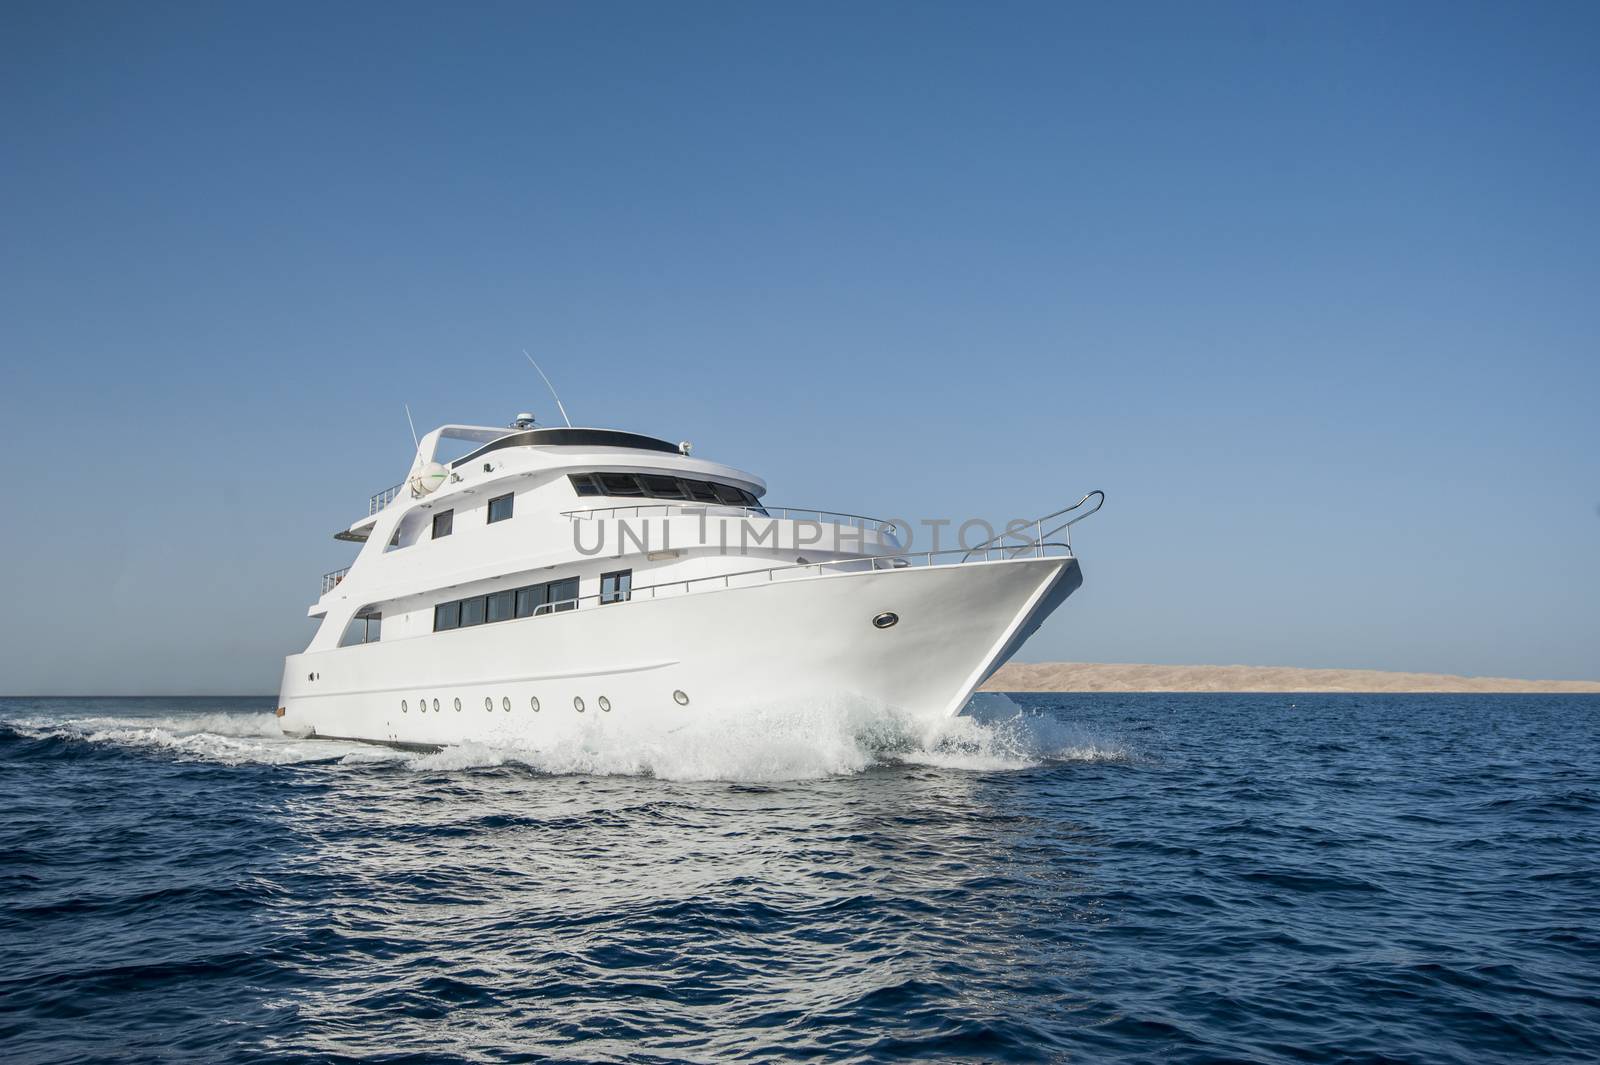 Luxury motor yacht at sea by paulvinten